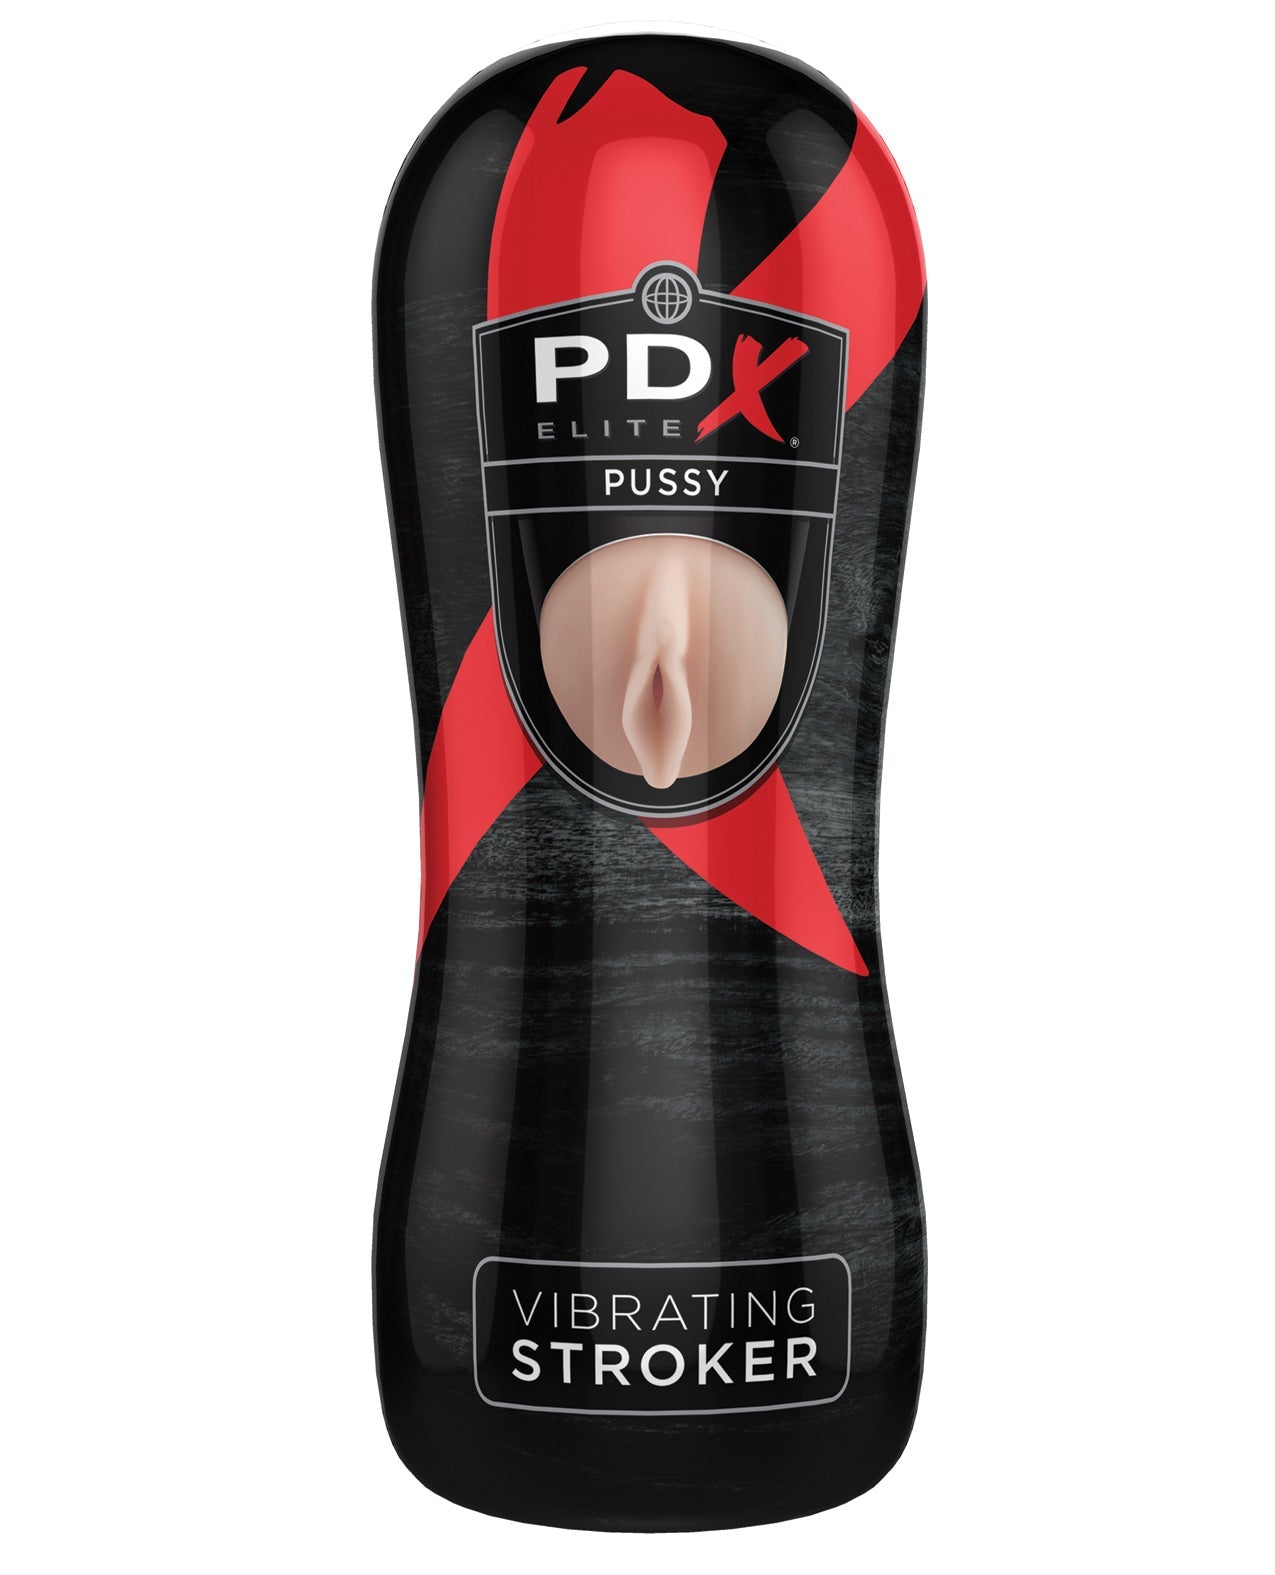 PDX Elite Vibrating Stroker - Pussy